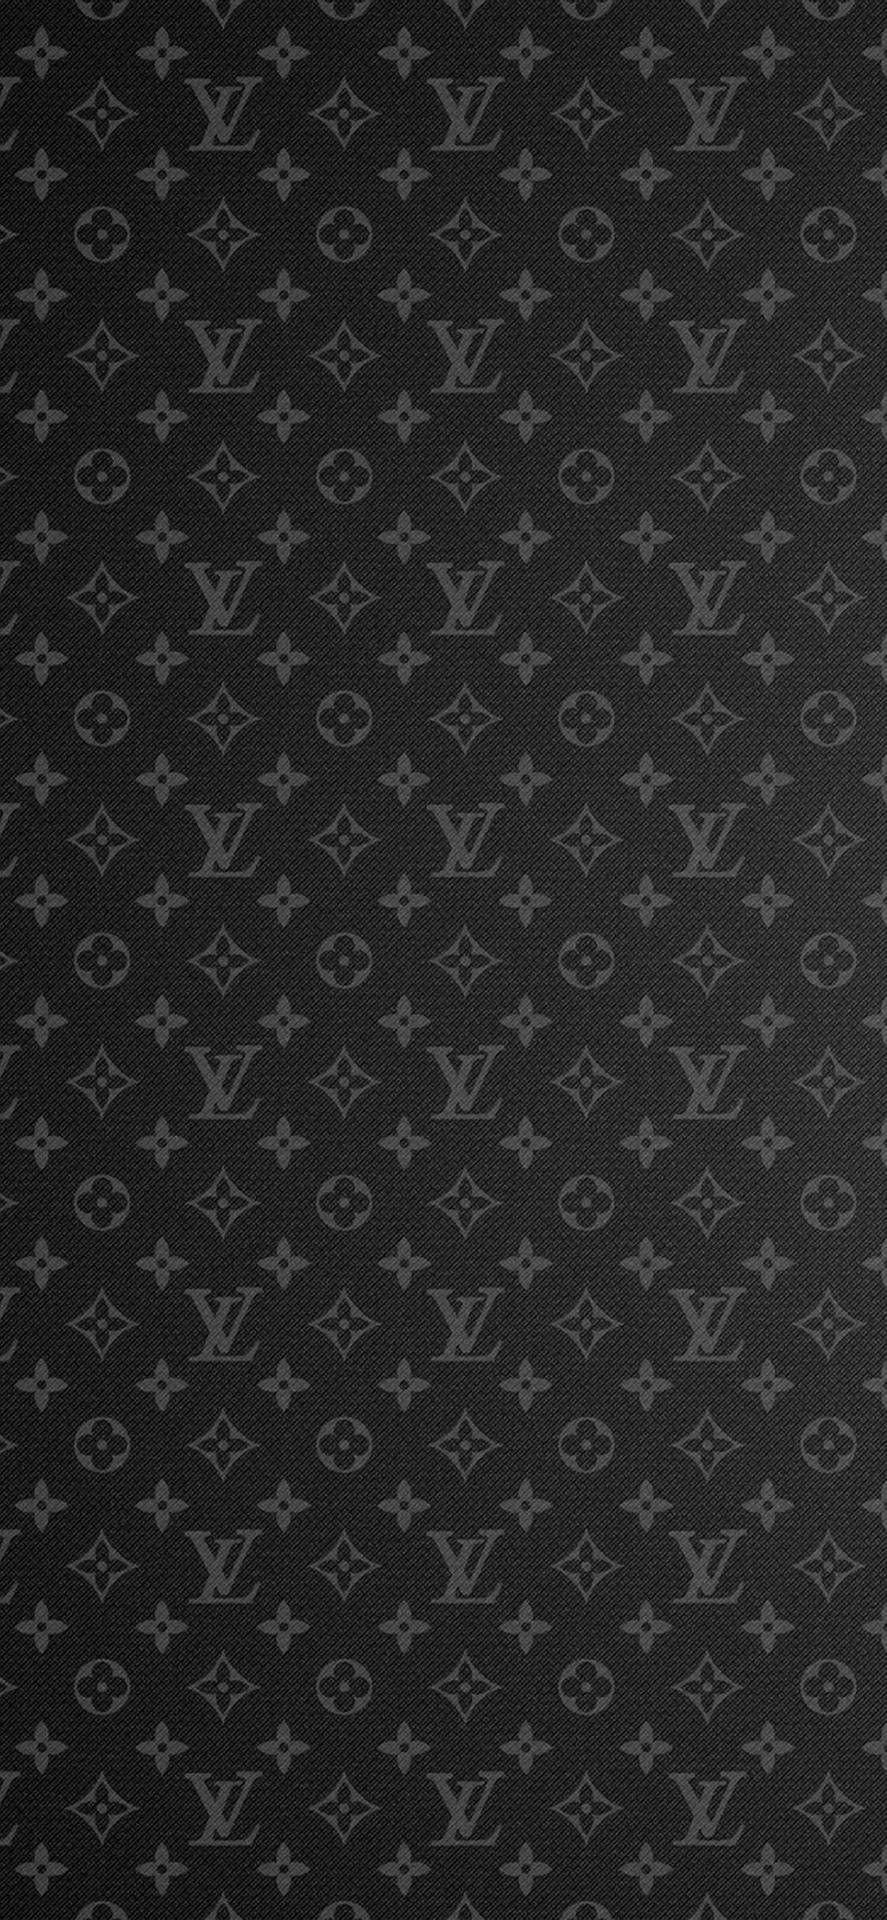 Louis vuitton iphone wallpaper, Louis vuitton pattern, Louis vuitton